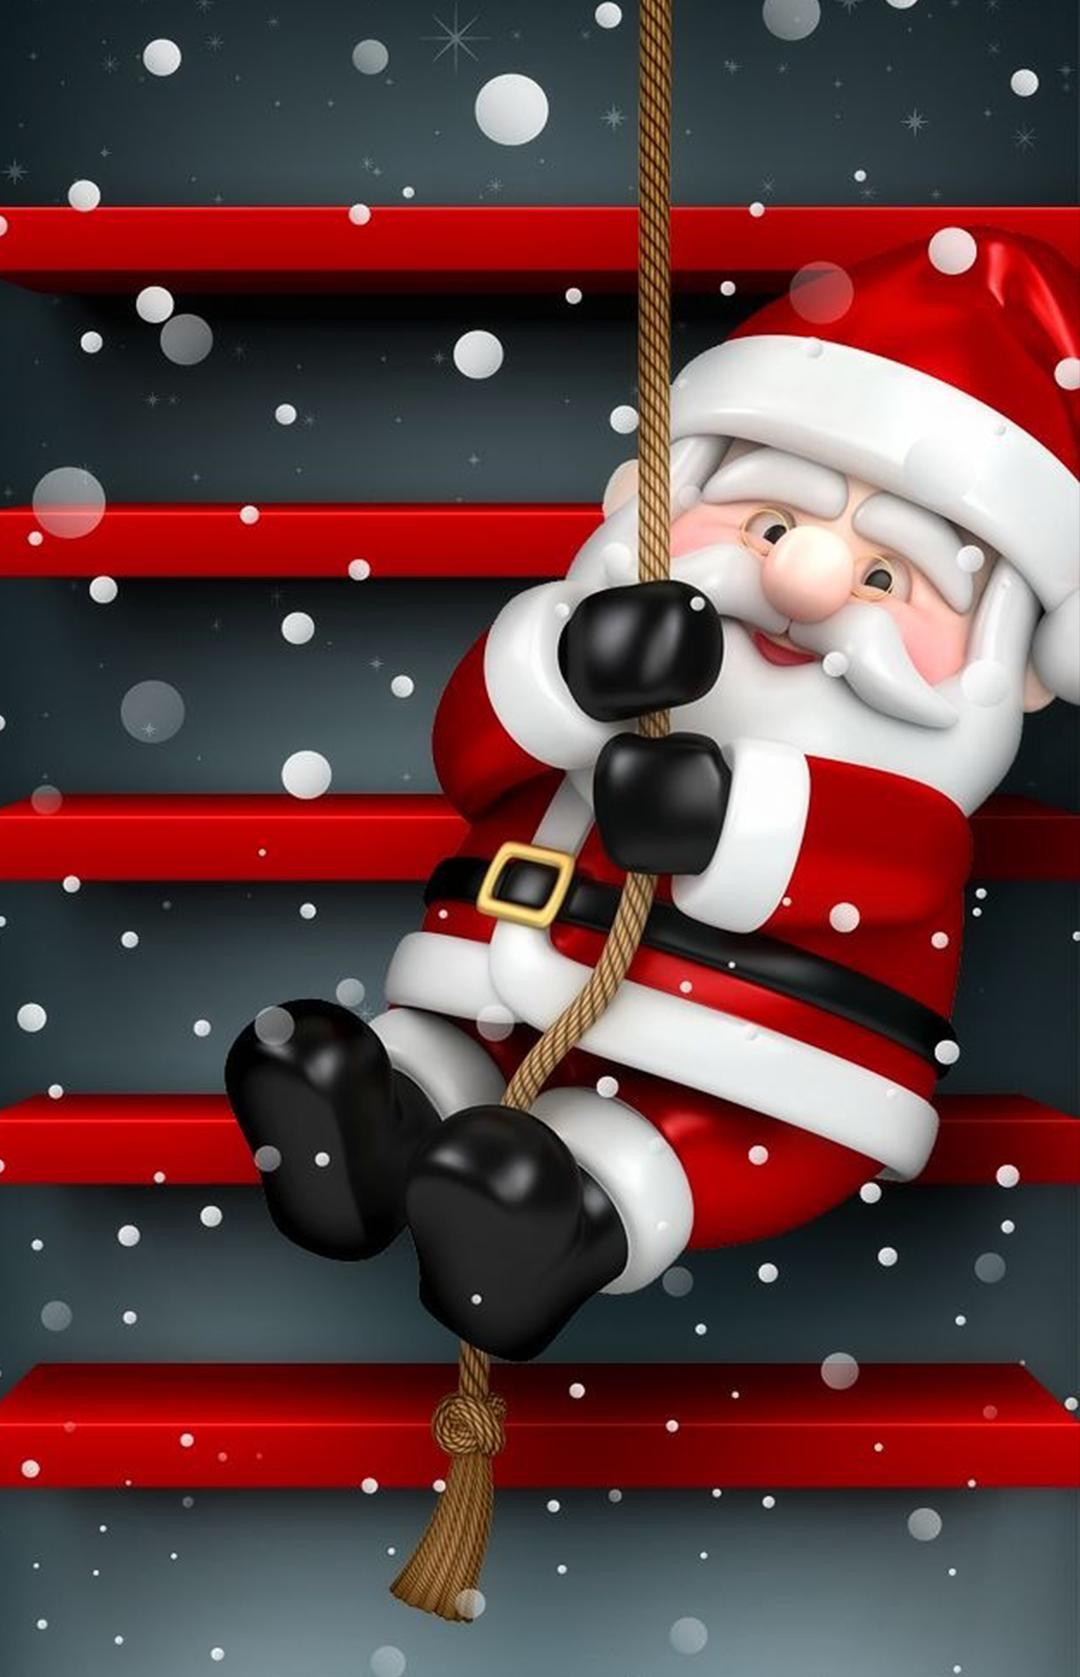 Santa Claus HD Wallpaper 2019 for Android